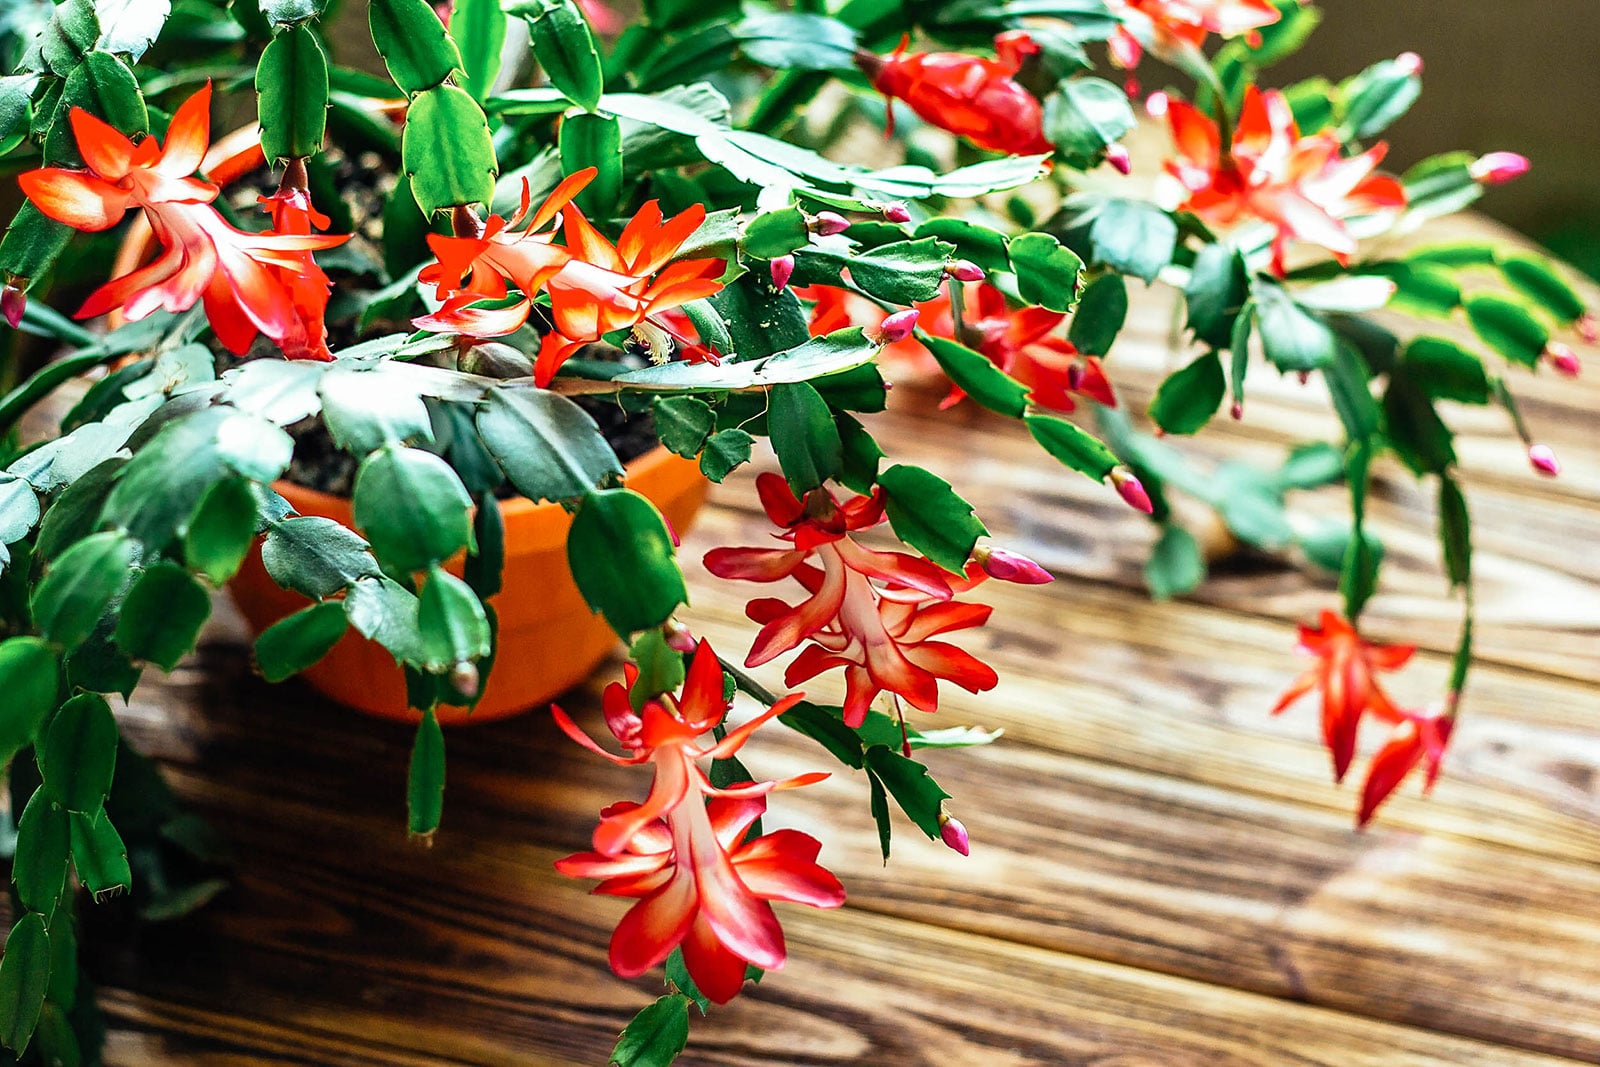 Holiday cactus plant (Schlumbergera) in an orange pot with reddish-orange blooms